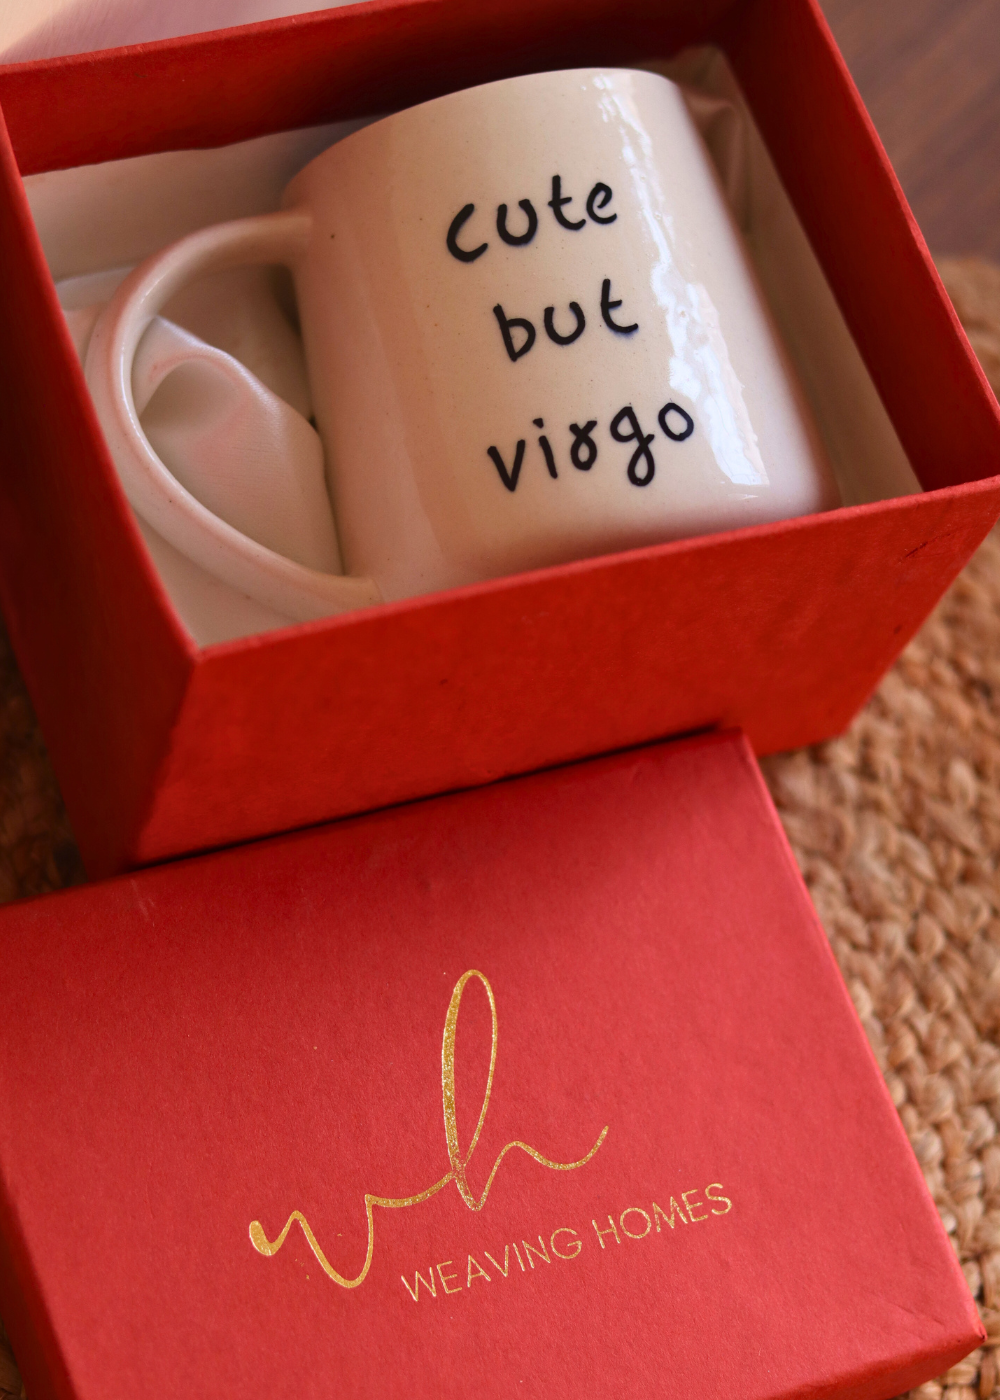 cute but virgo mug in a gift box made by ceramic